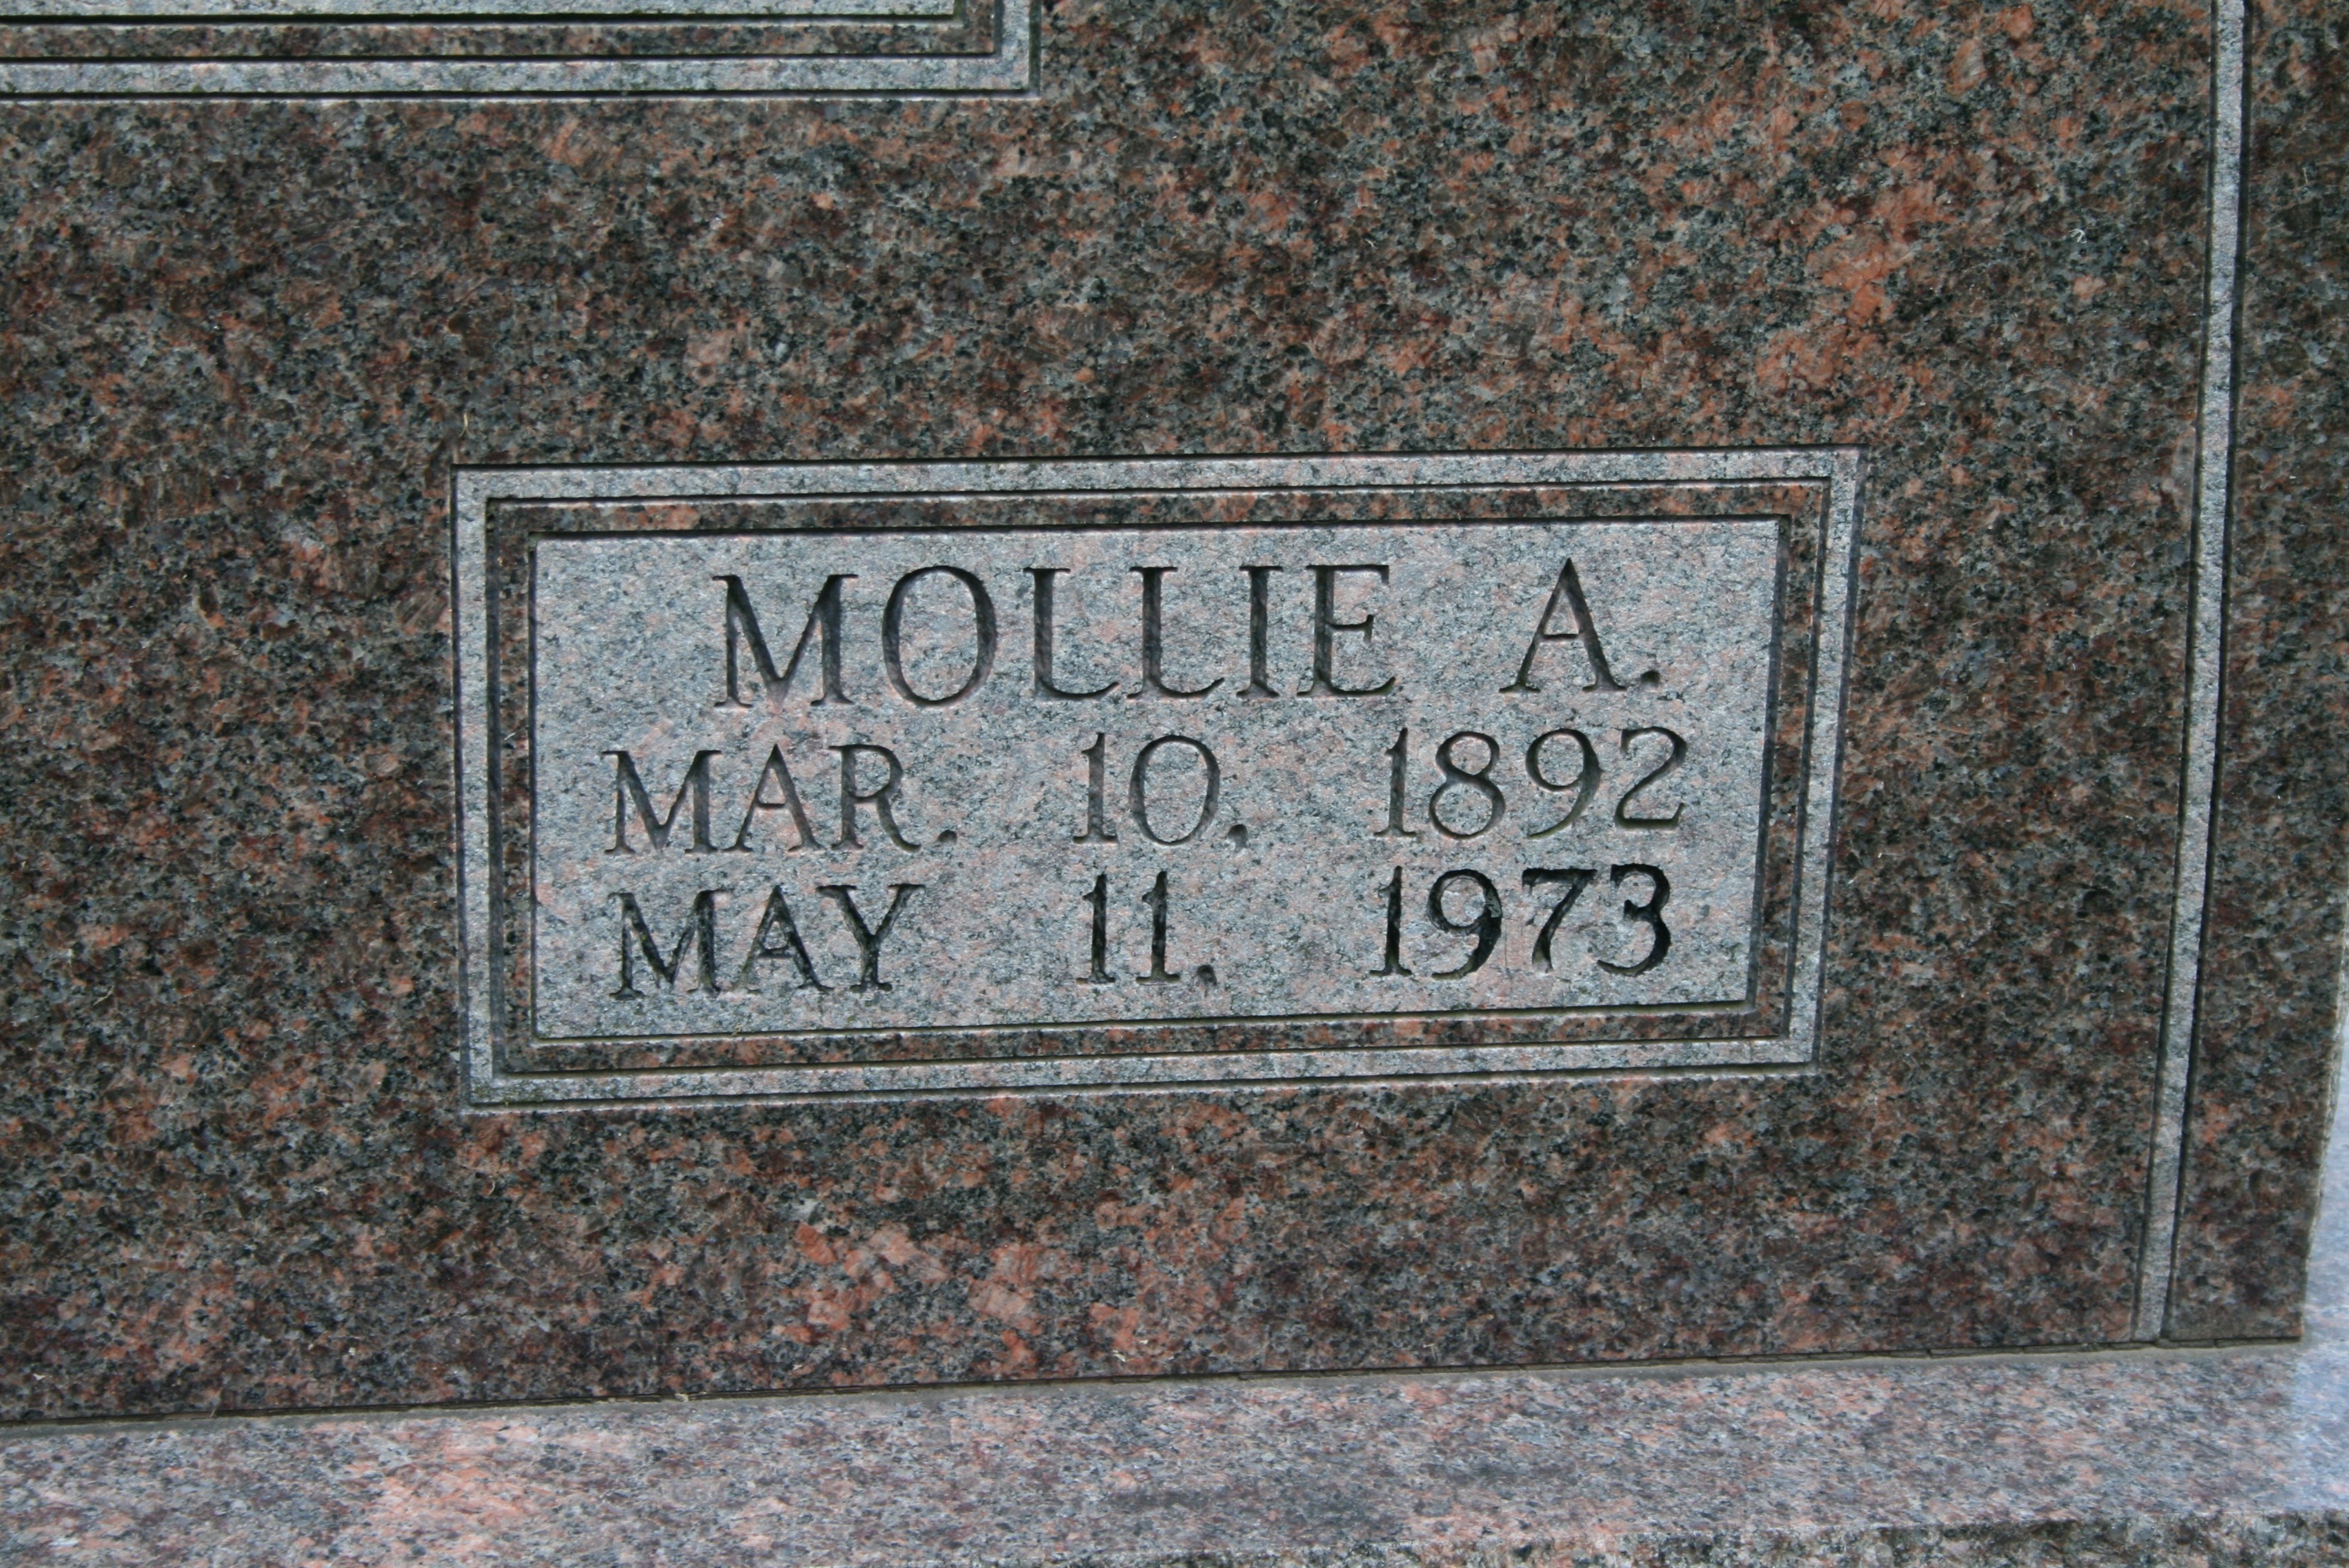 Fish, Mollie A.